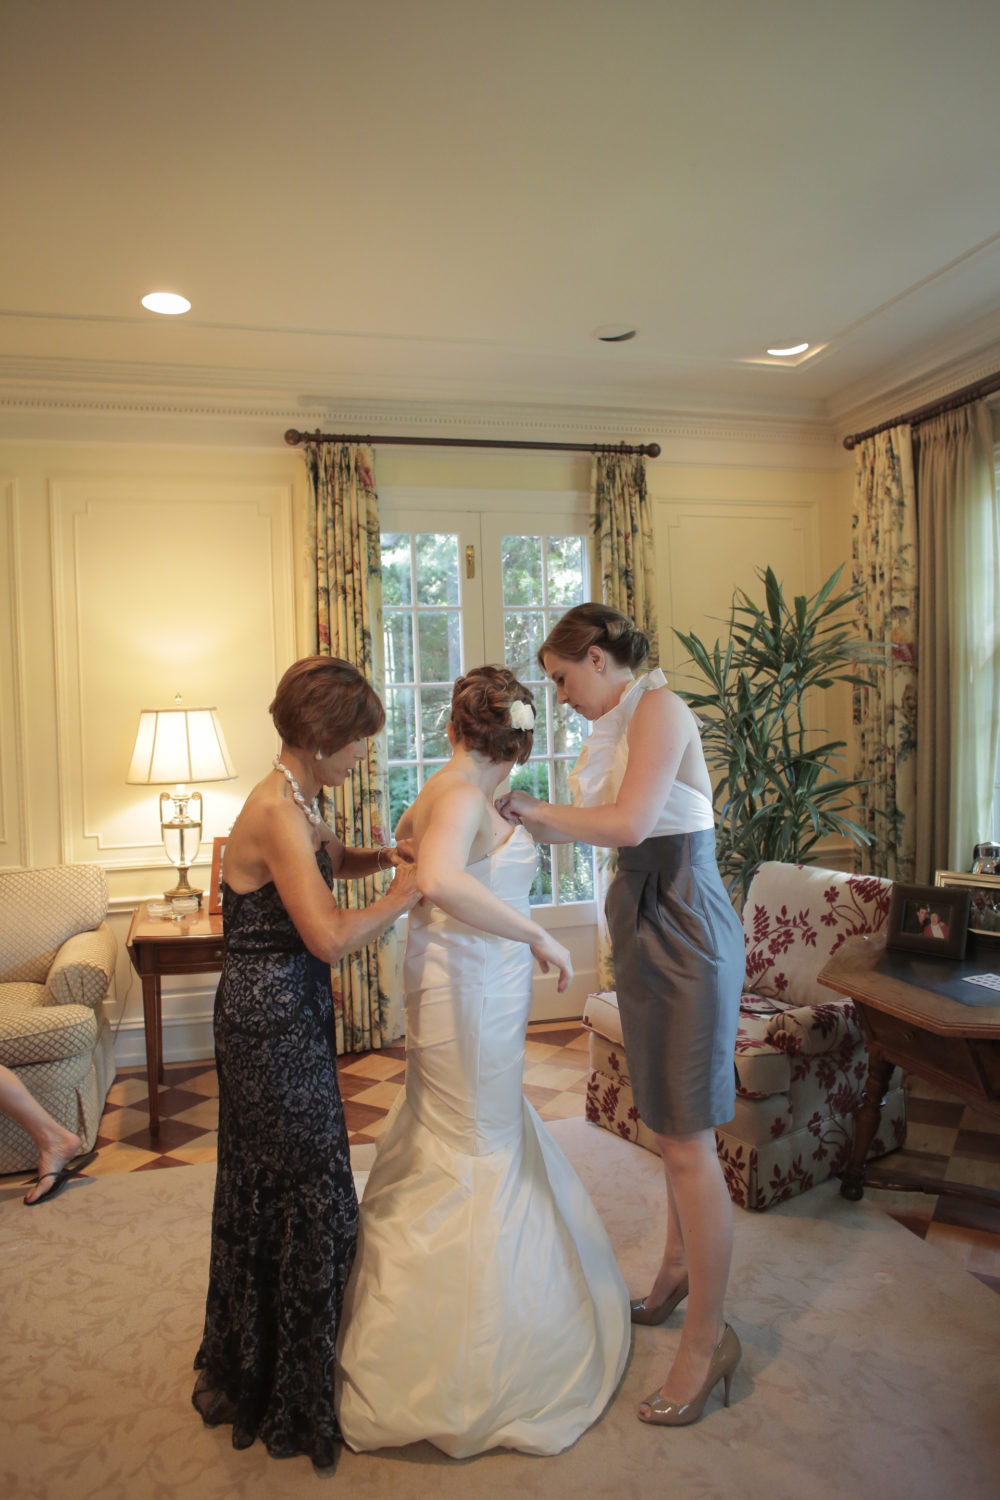 dressing the Bride